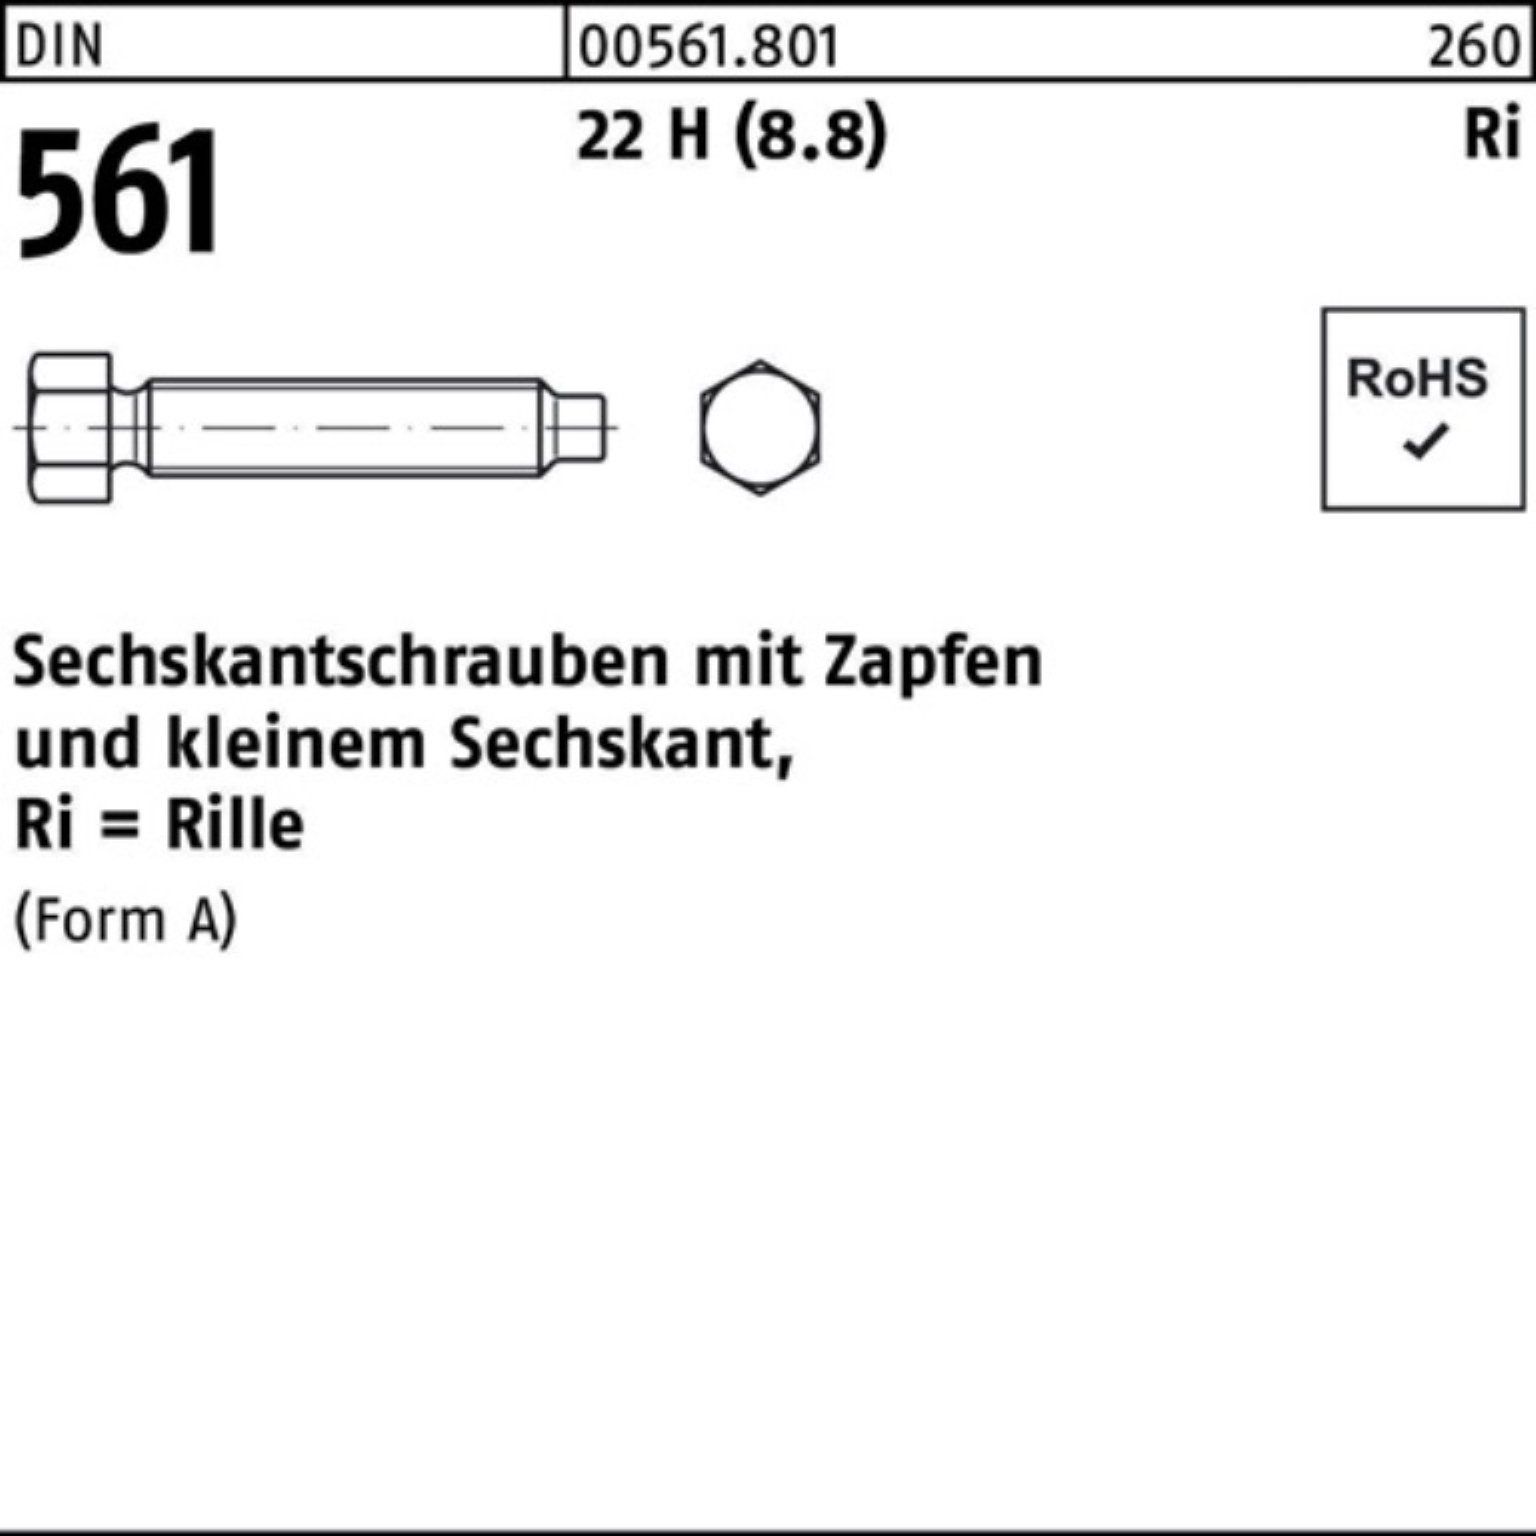 1 Reyher St Sechskantschraube 24x 120 Zapfen Sechskantschraube 561 AM Pack H 100er DIN 22 (8.8)